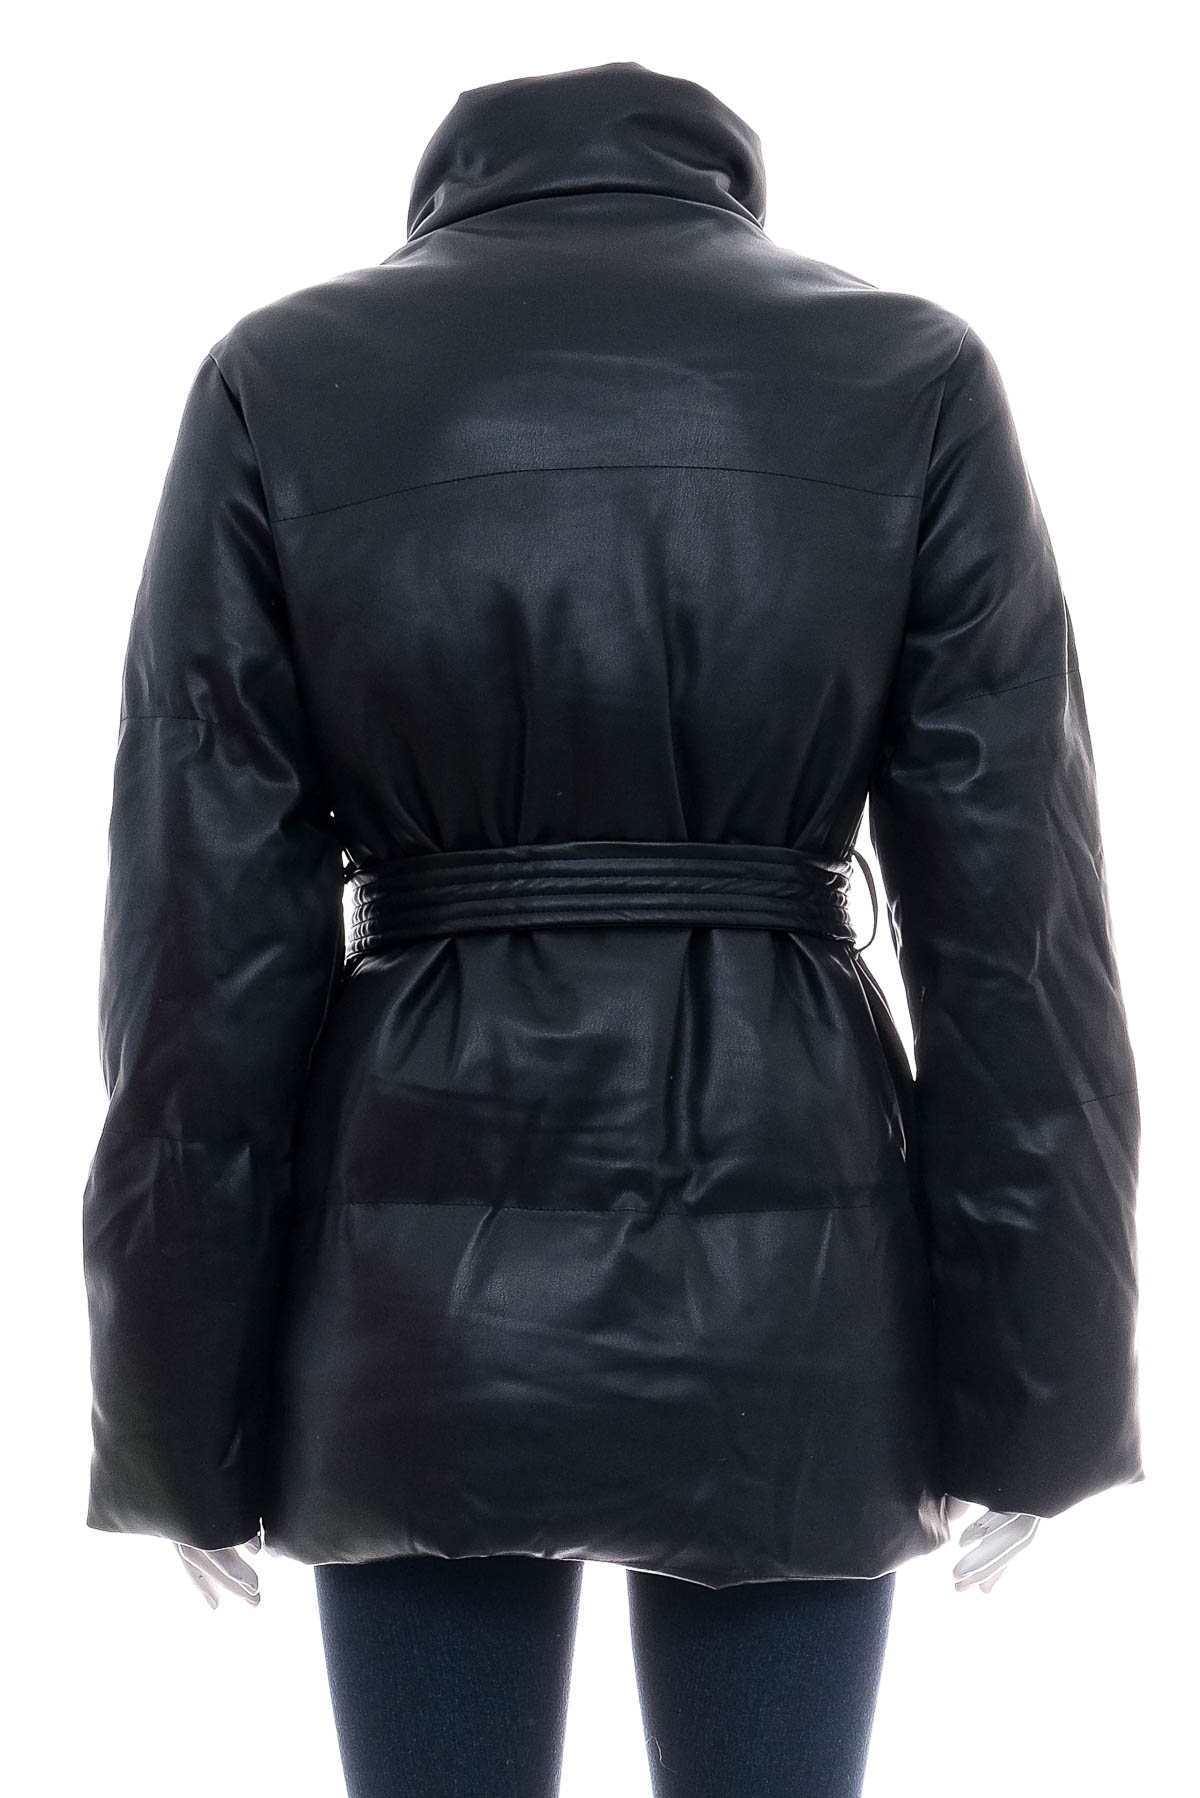 Women's leather jacket - NA-KD - 1